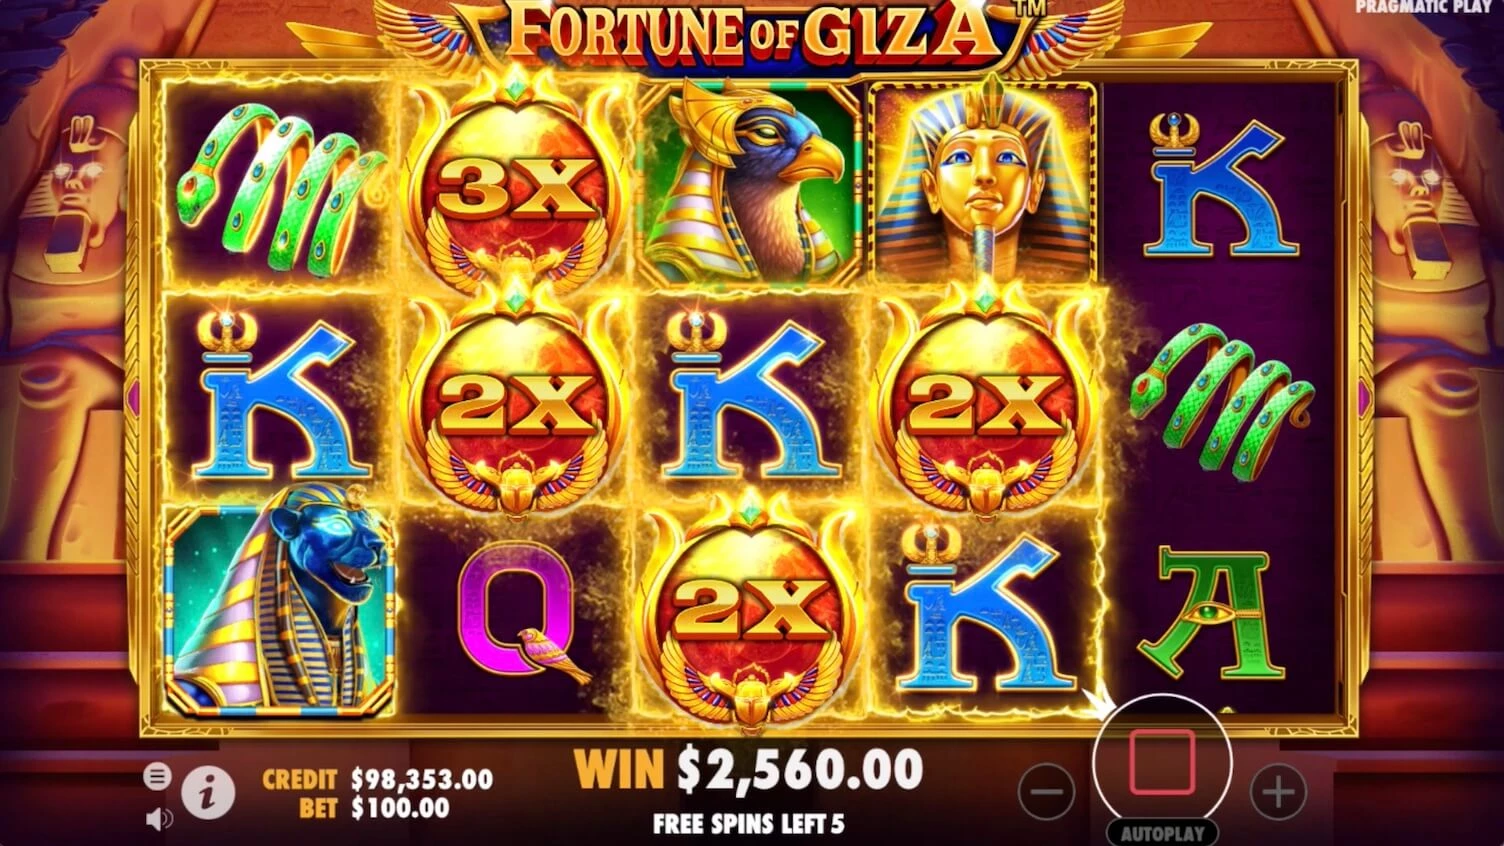 Fortune of Giza win 2560 dollars